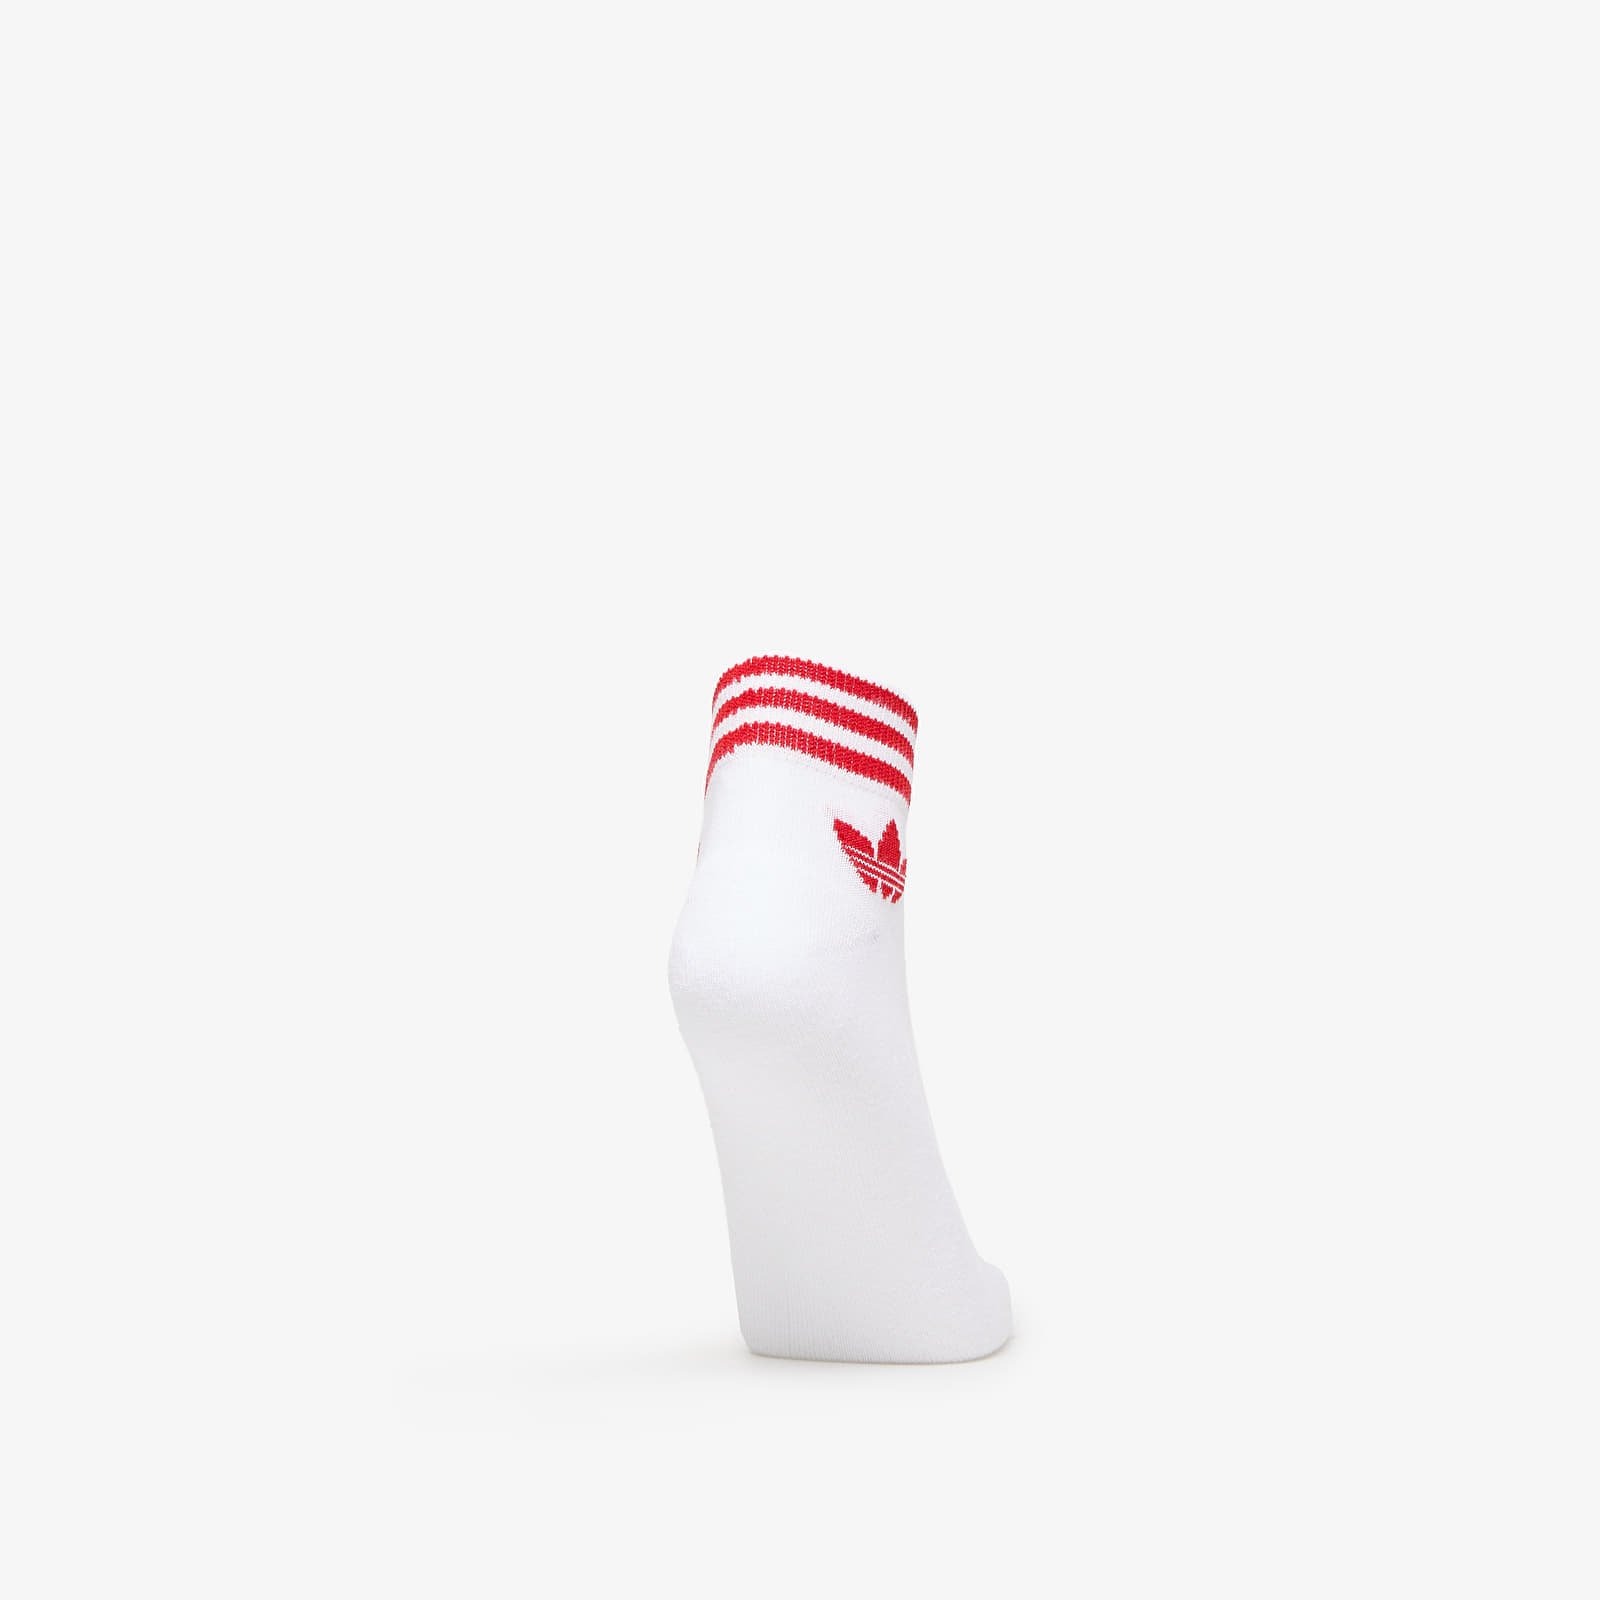 Trefoil Ankle Socks – 3 pairs